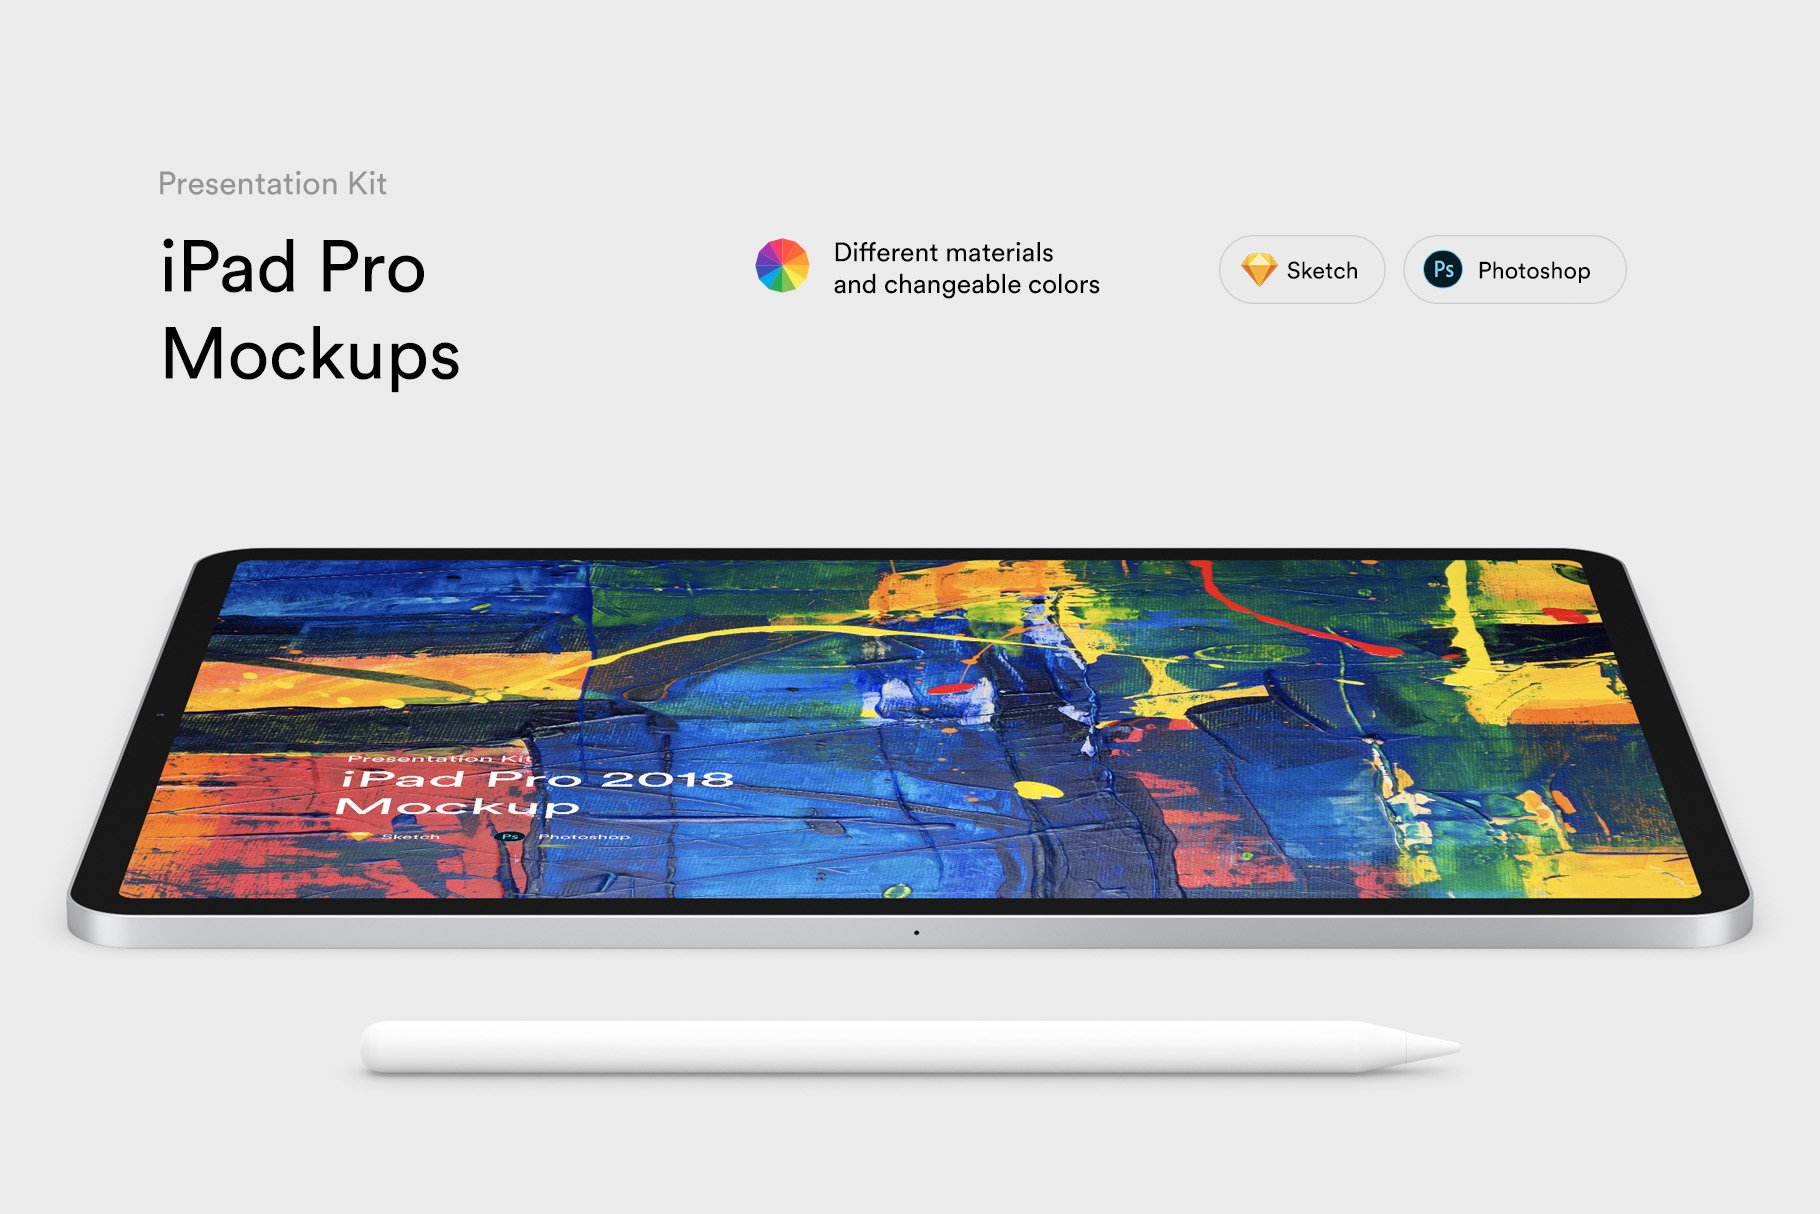 iPad Pro Mockups (2018) | PK cover image.